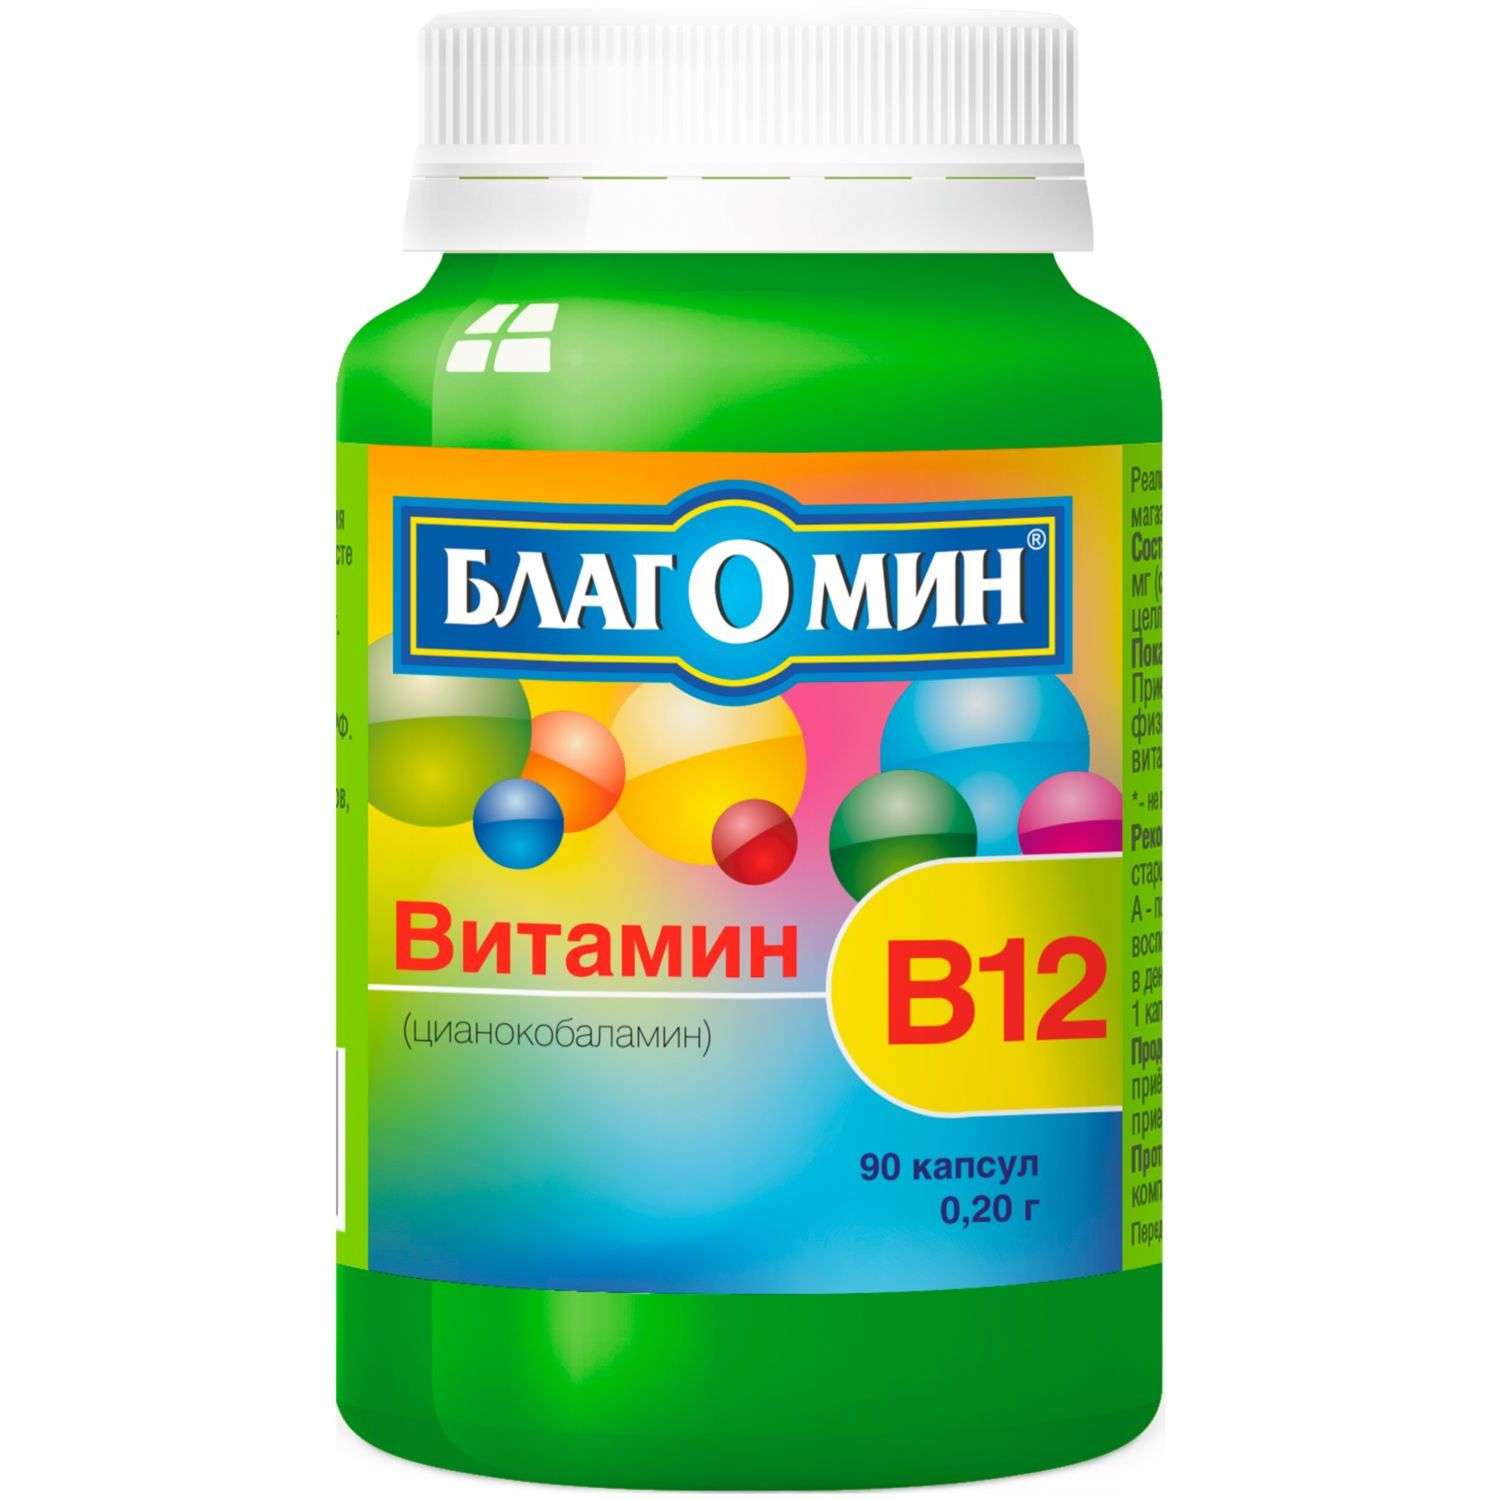 Благомин Витамин В12 цианокобаламин 90капсул - фото 1